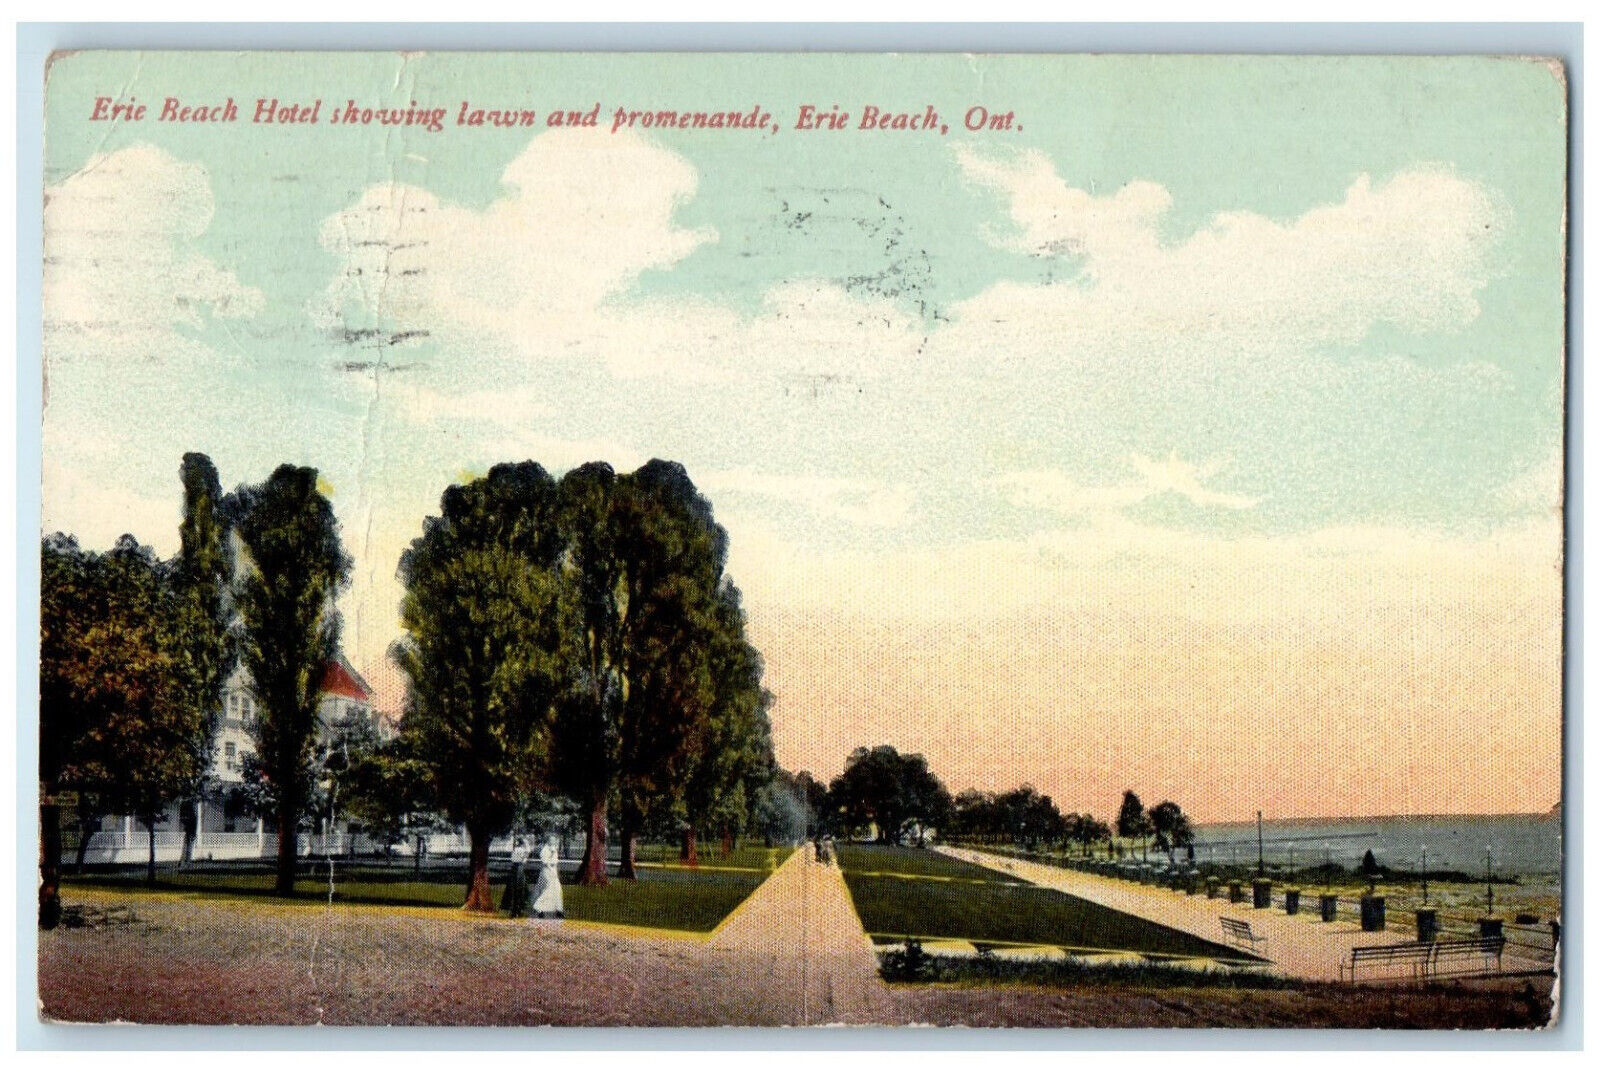 1913 Erie Beach Hotel Lawn and Promenade Erie Beach Ontario Canada Postcard